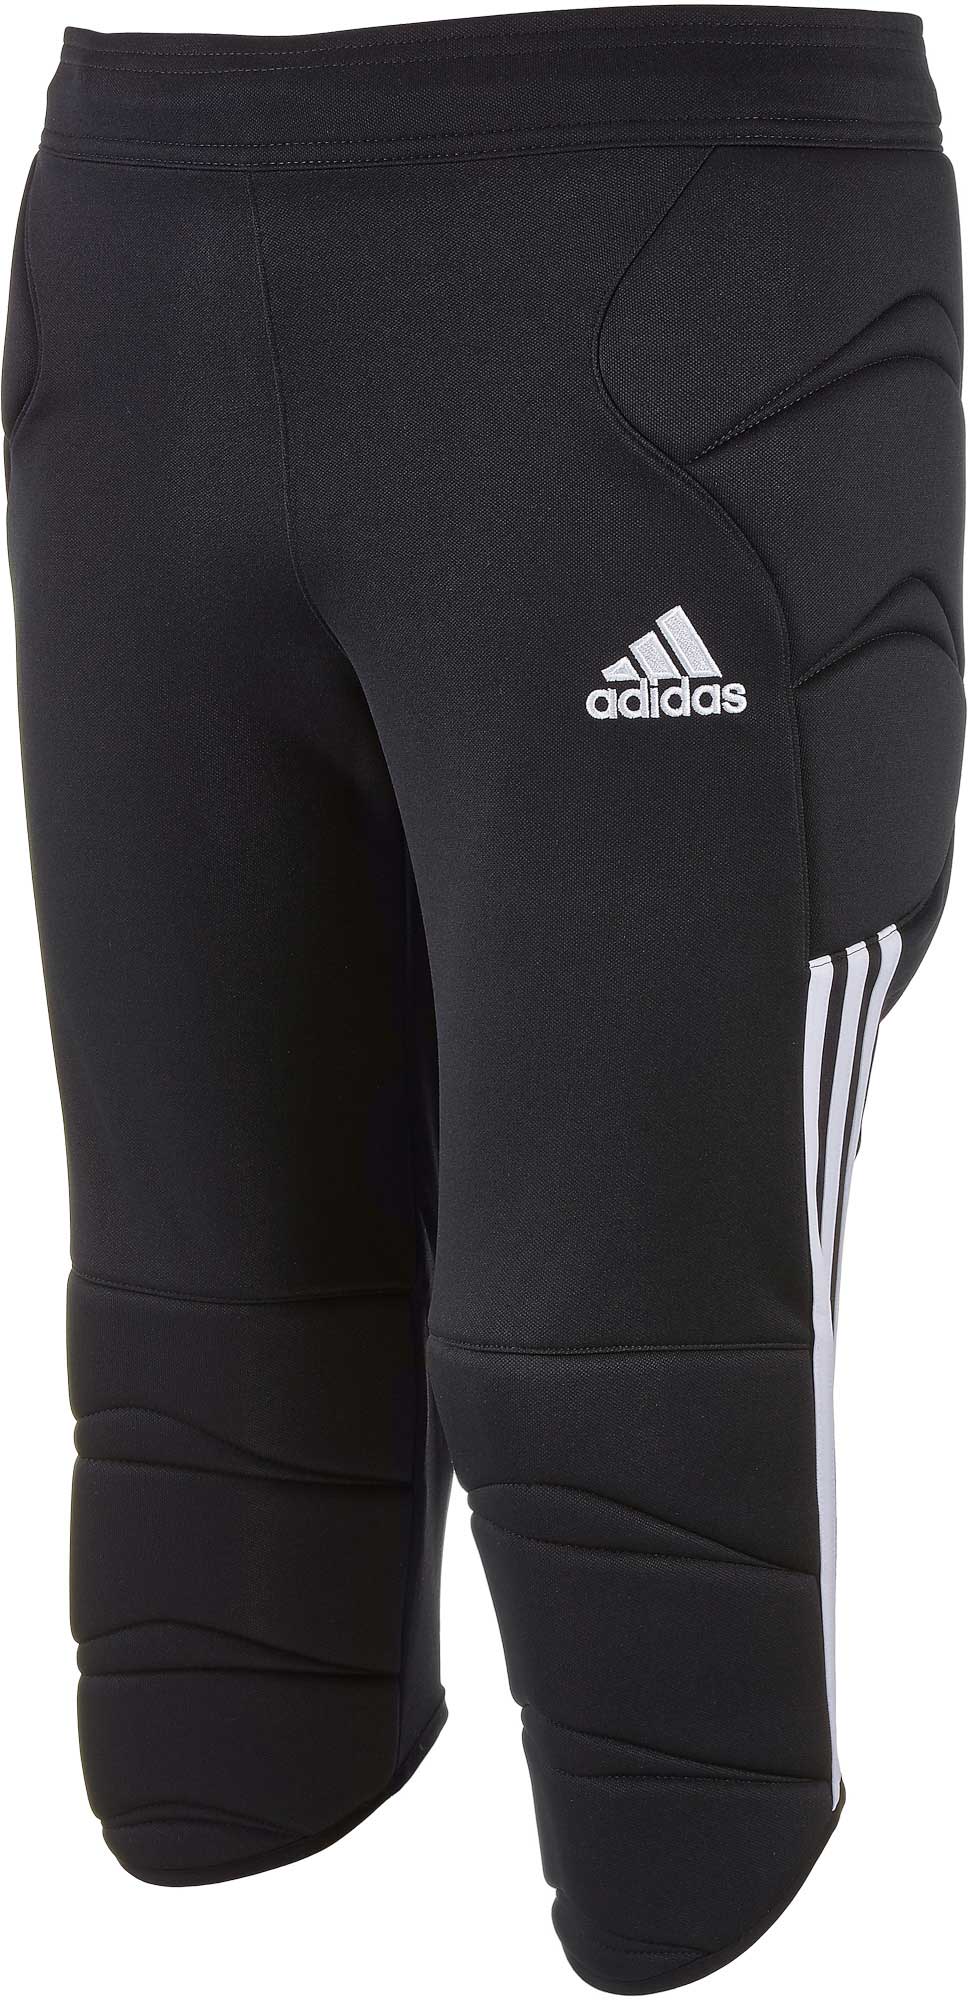 adidas goalkeeper pants